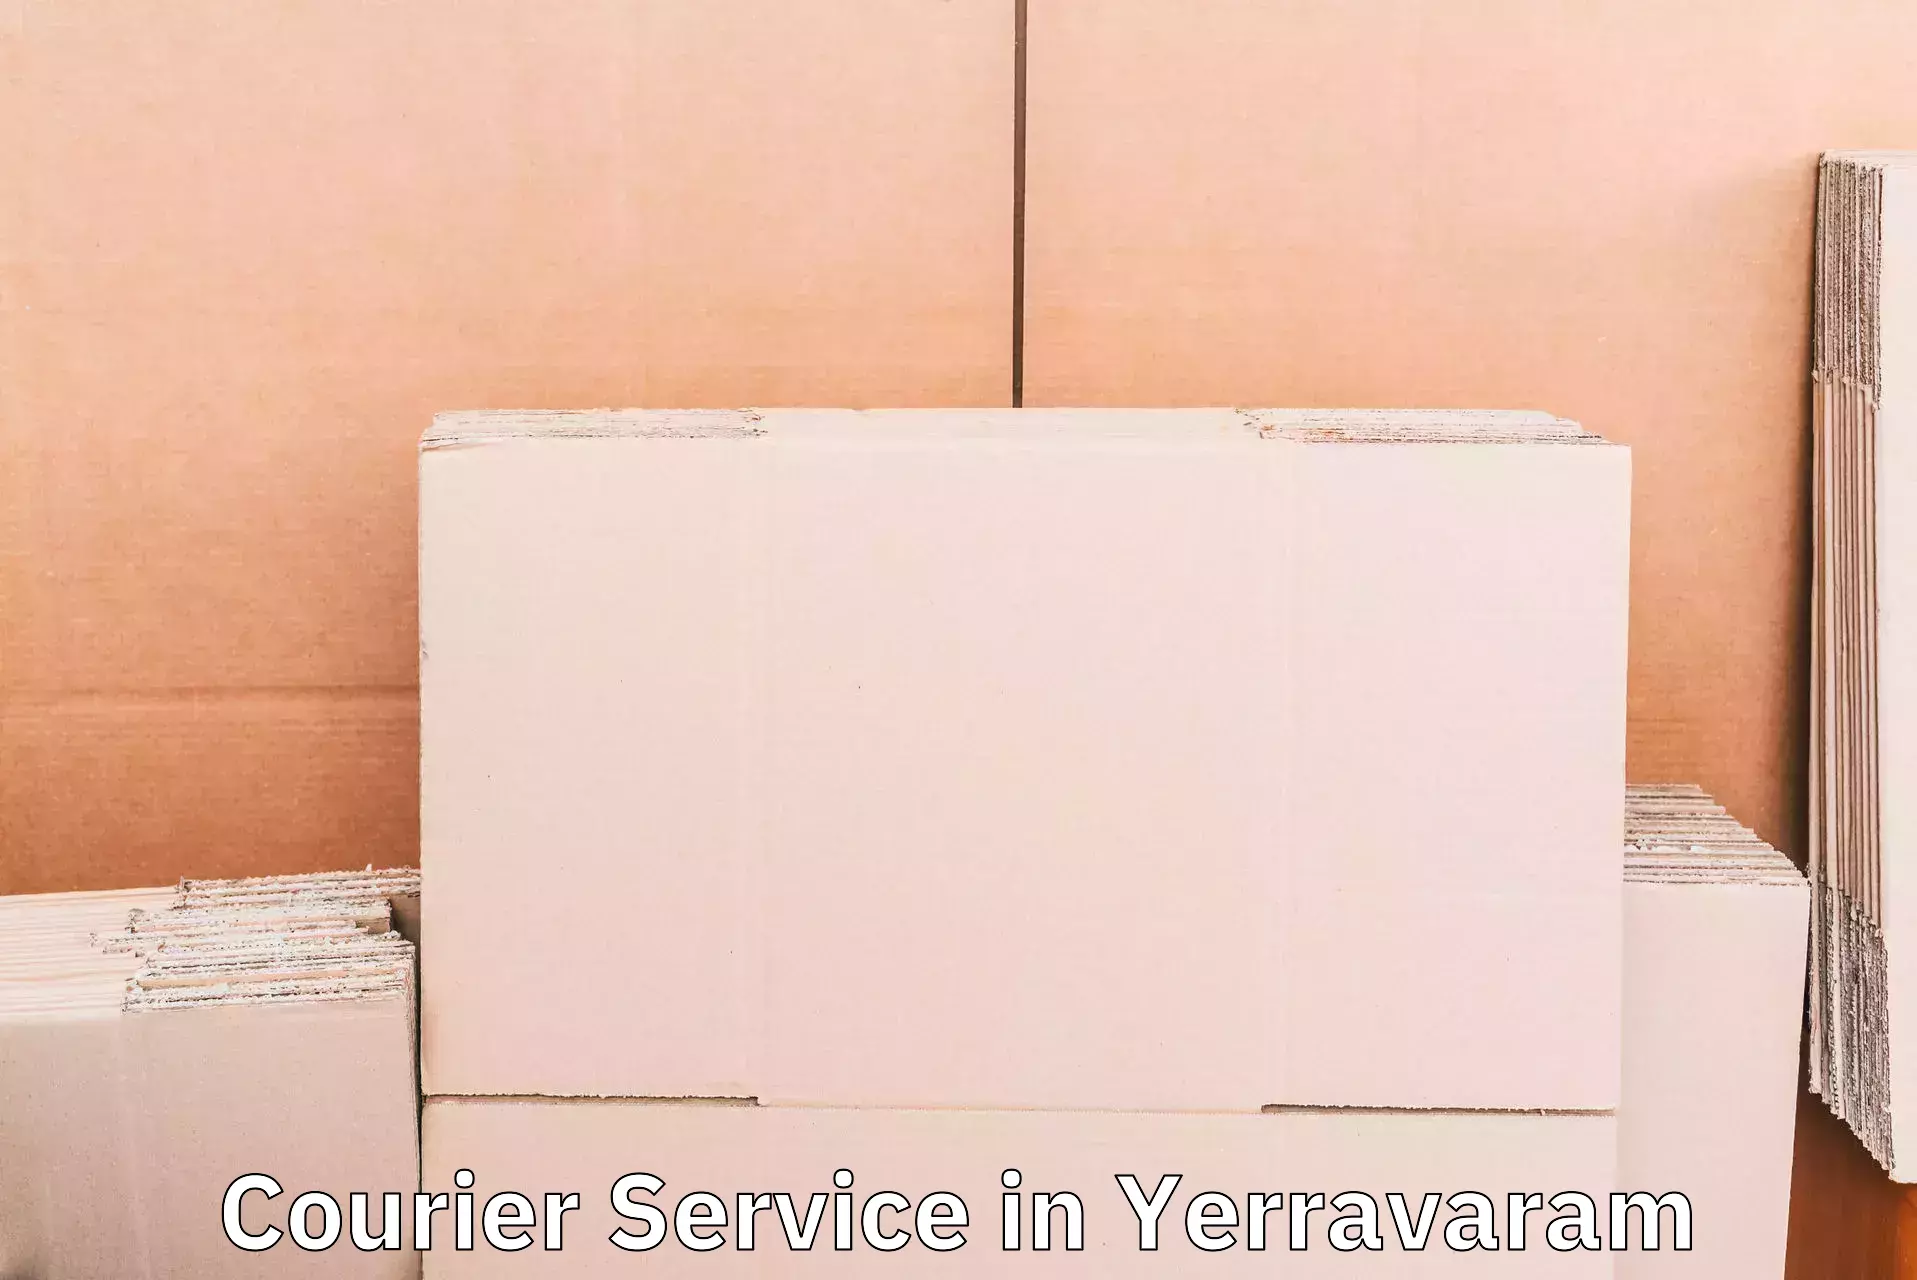 High-priority parcel service in Yerravaram